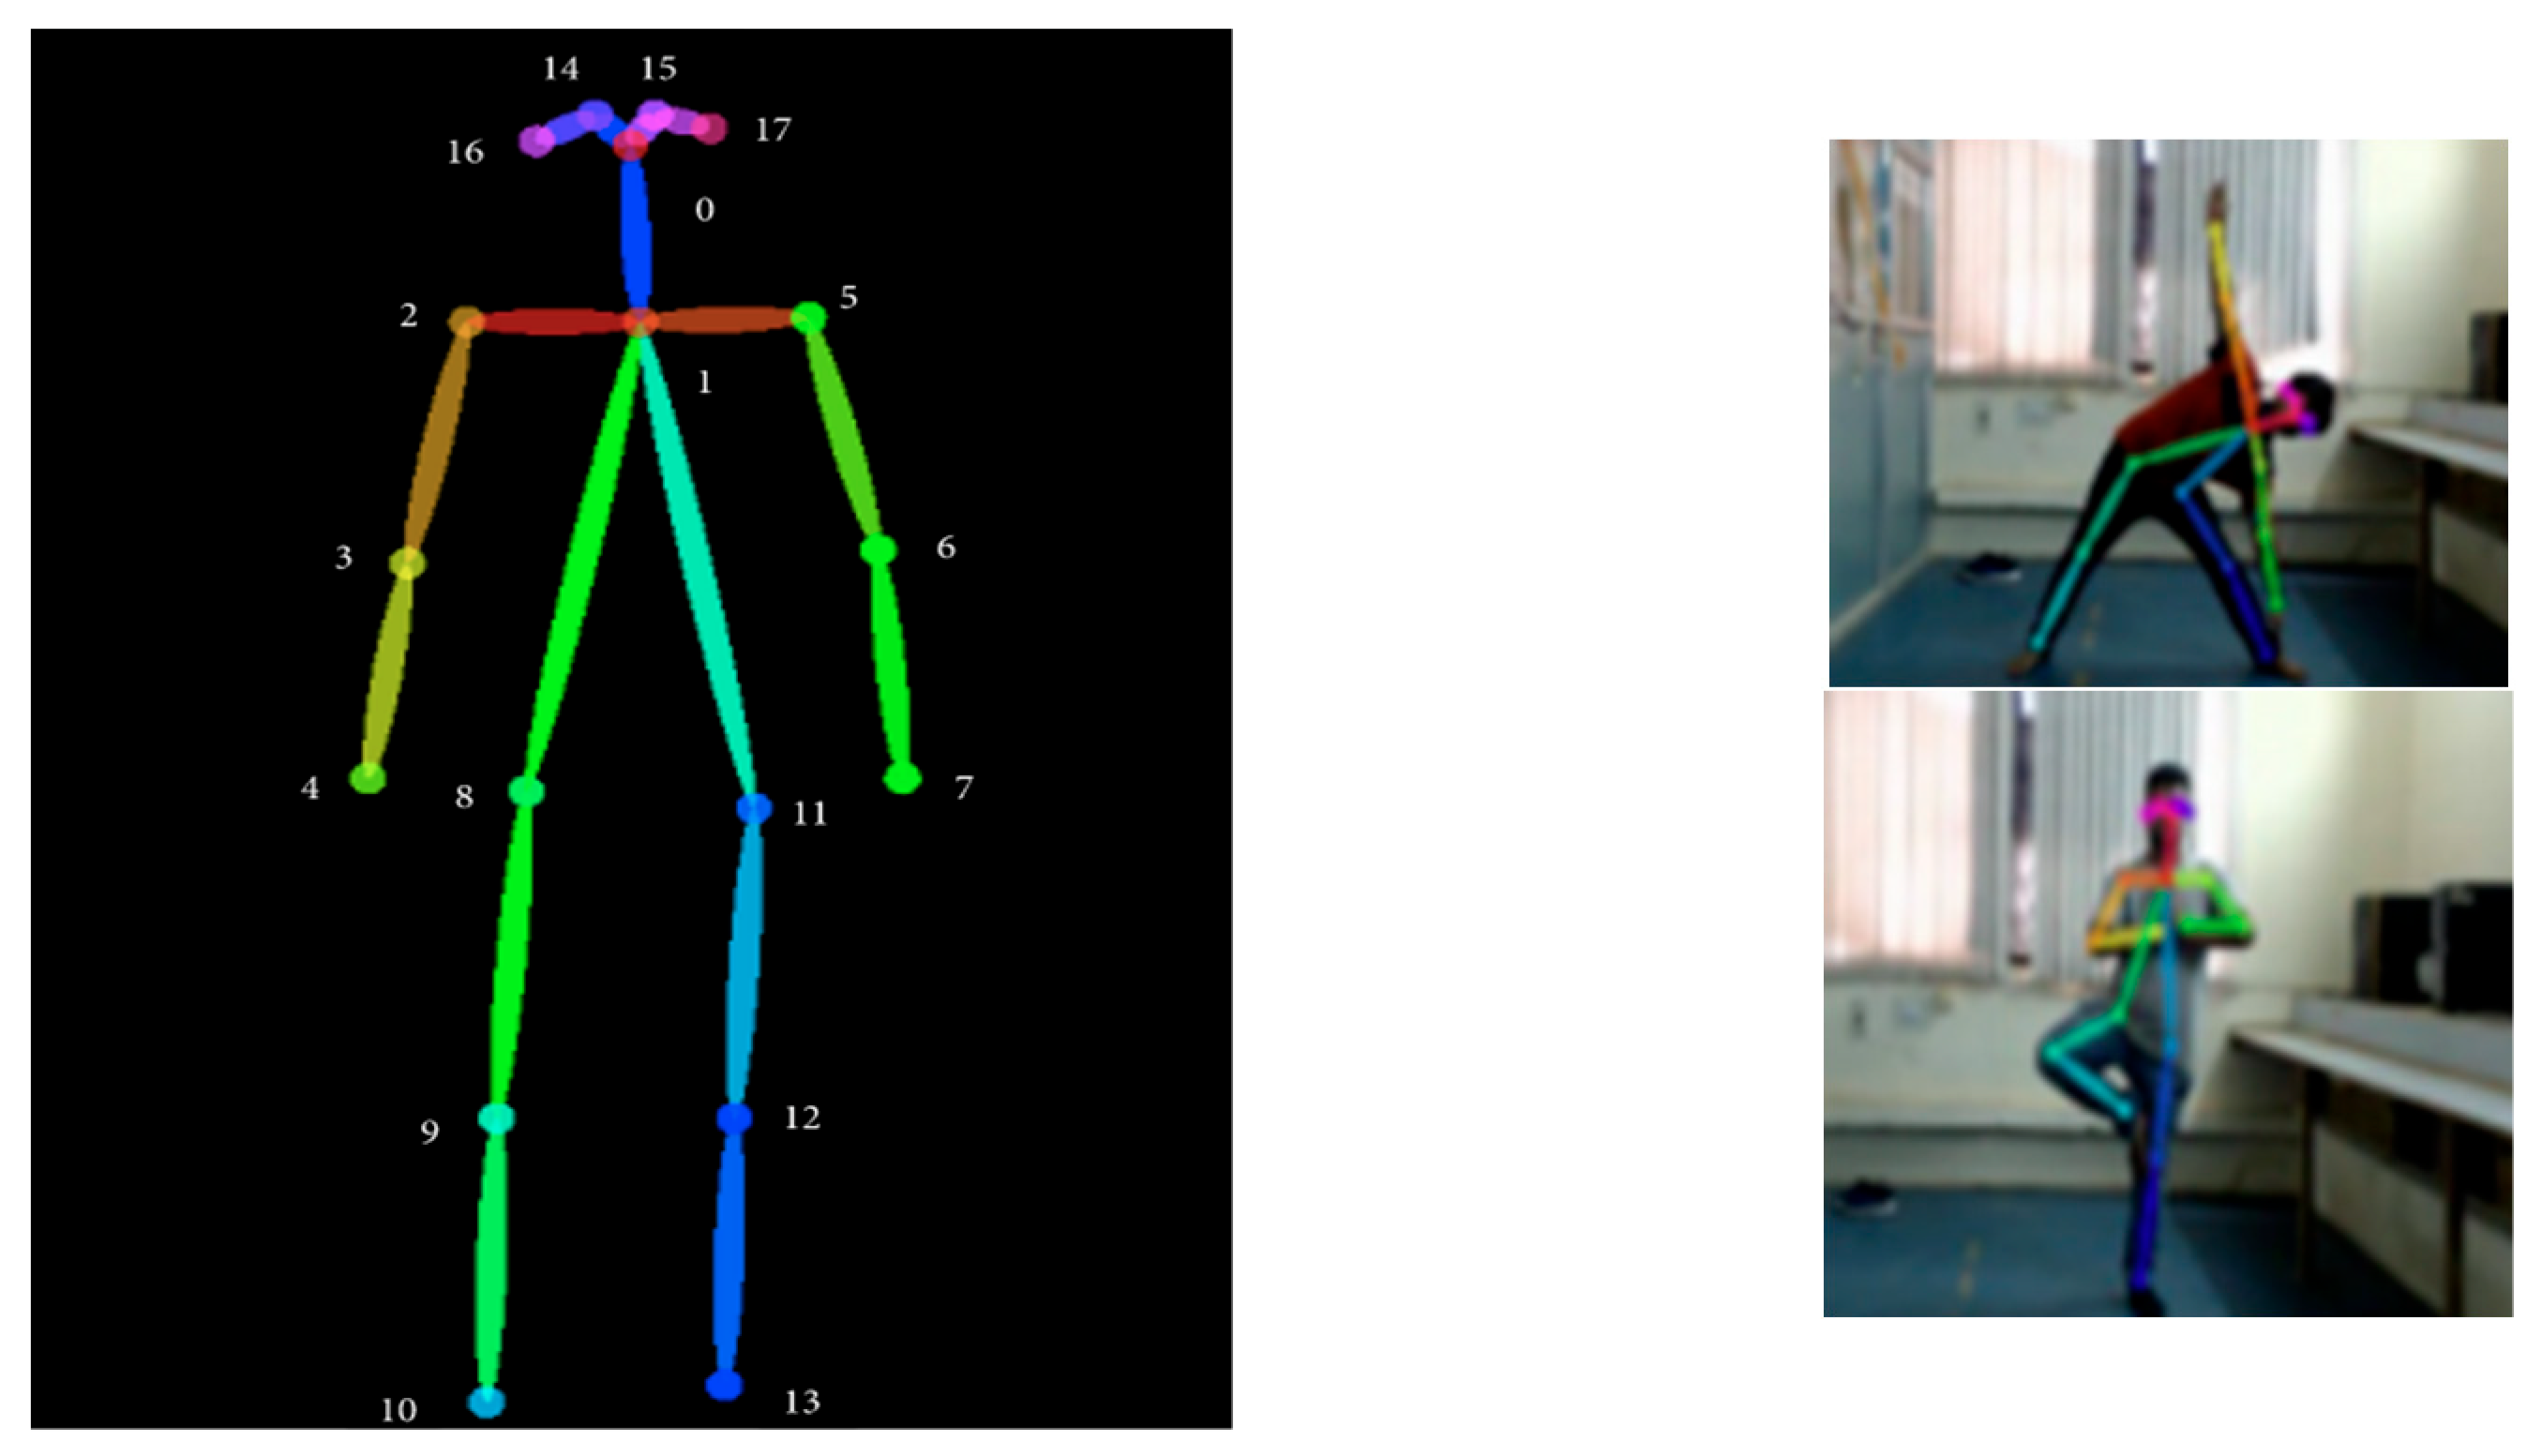 Real-Time Multi-View 3D Human Pose Estimation using Semantic Feedback to  Smart Edge Sensors